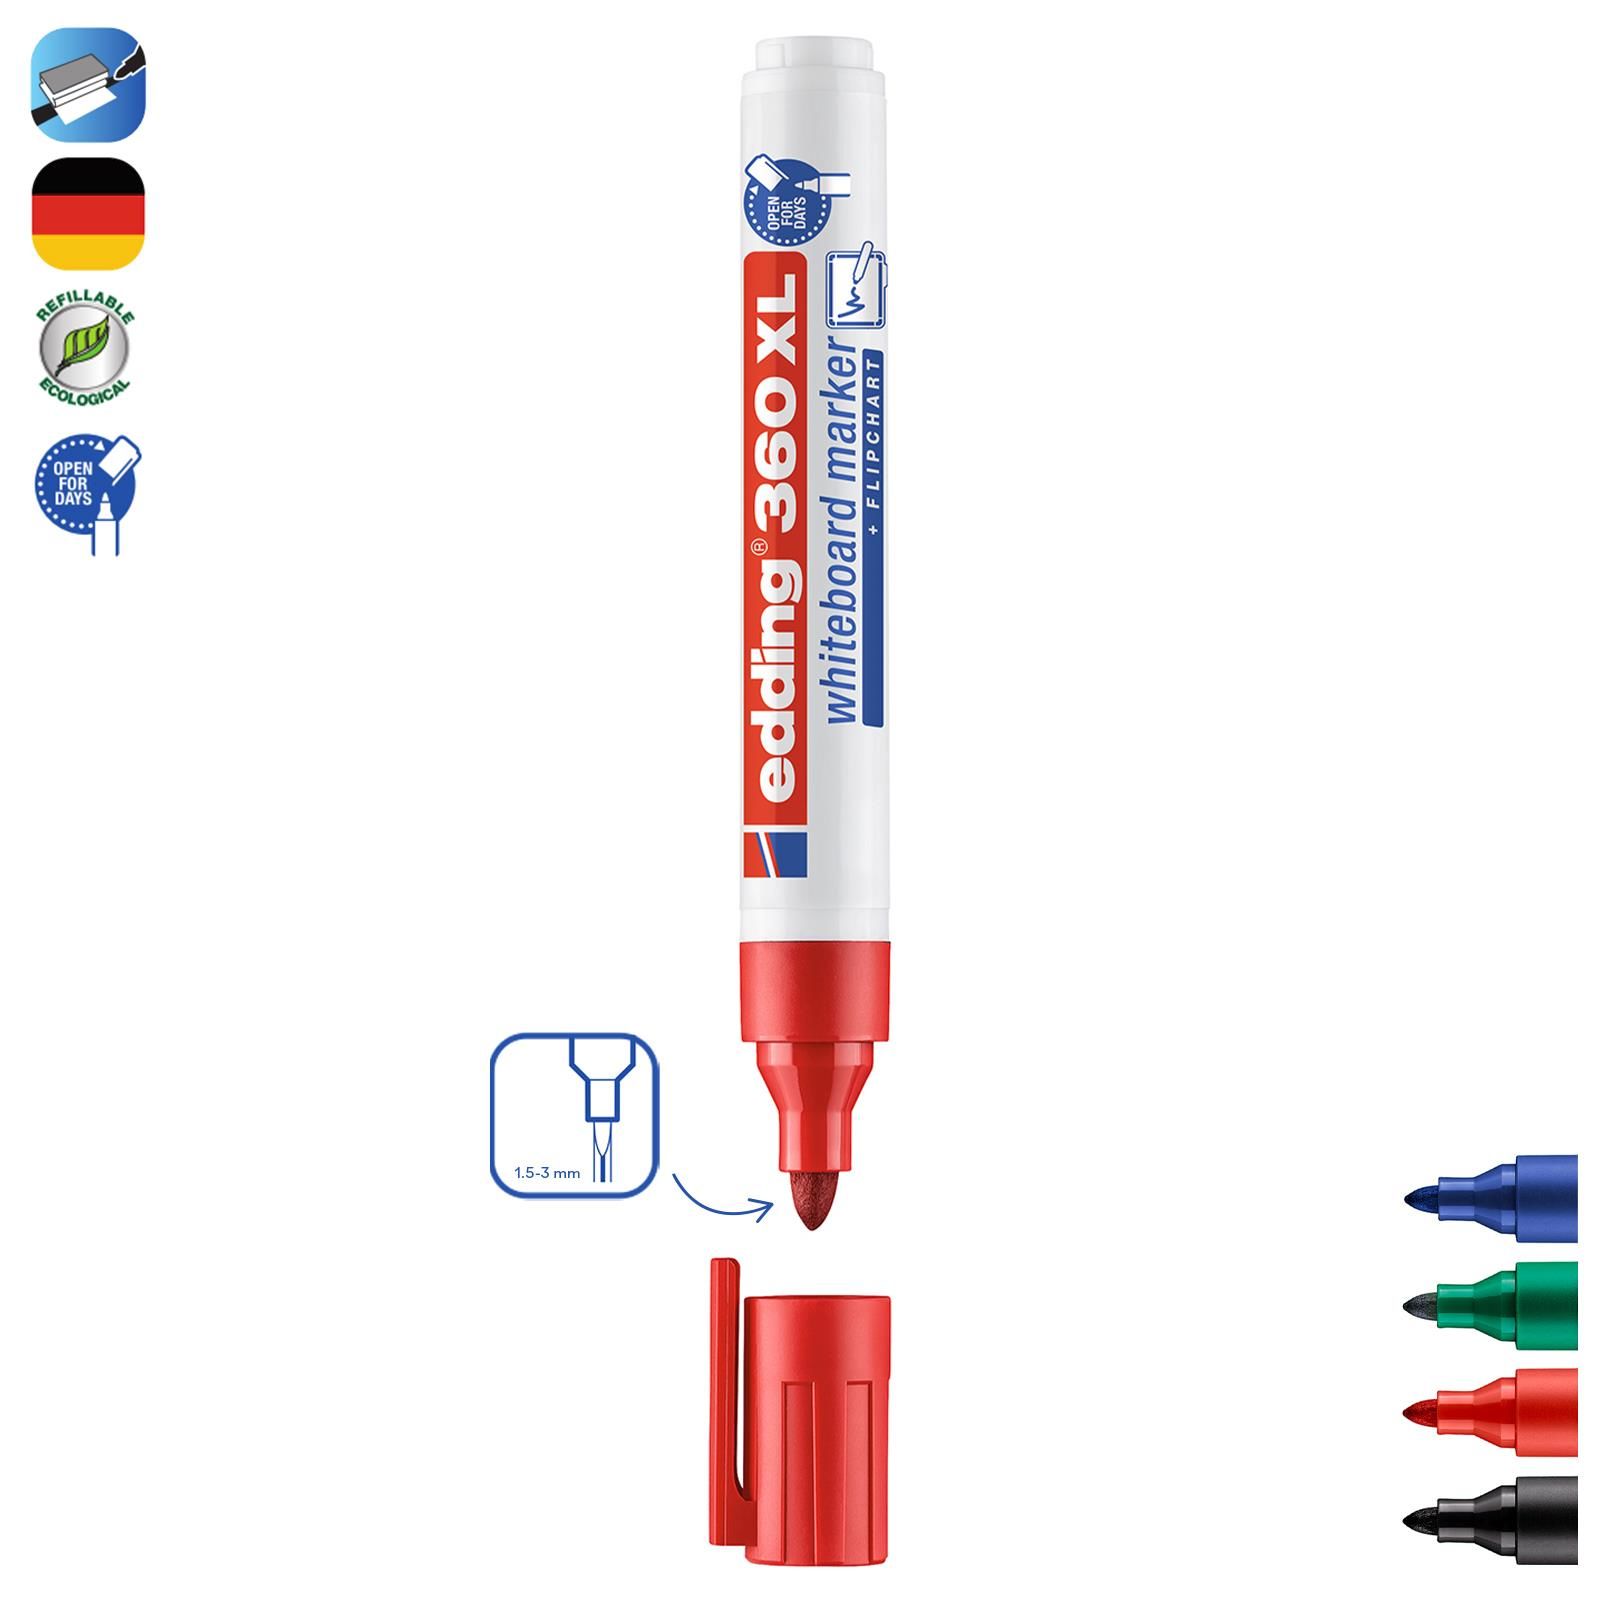 edding 360 XL whiteboard marker - Product - edding